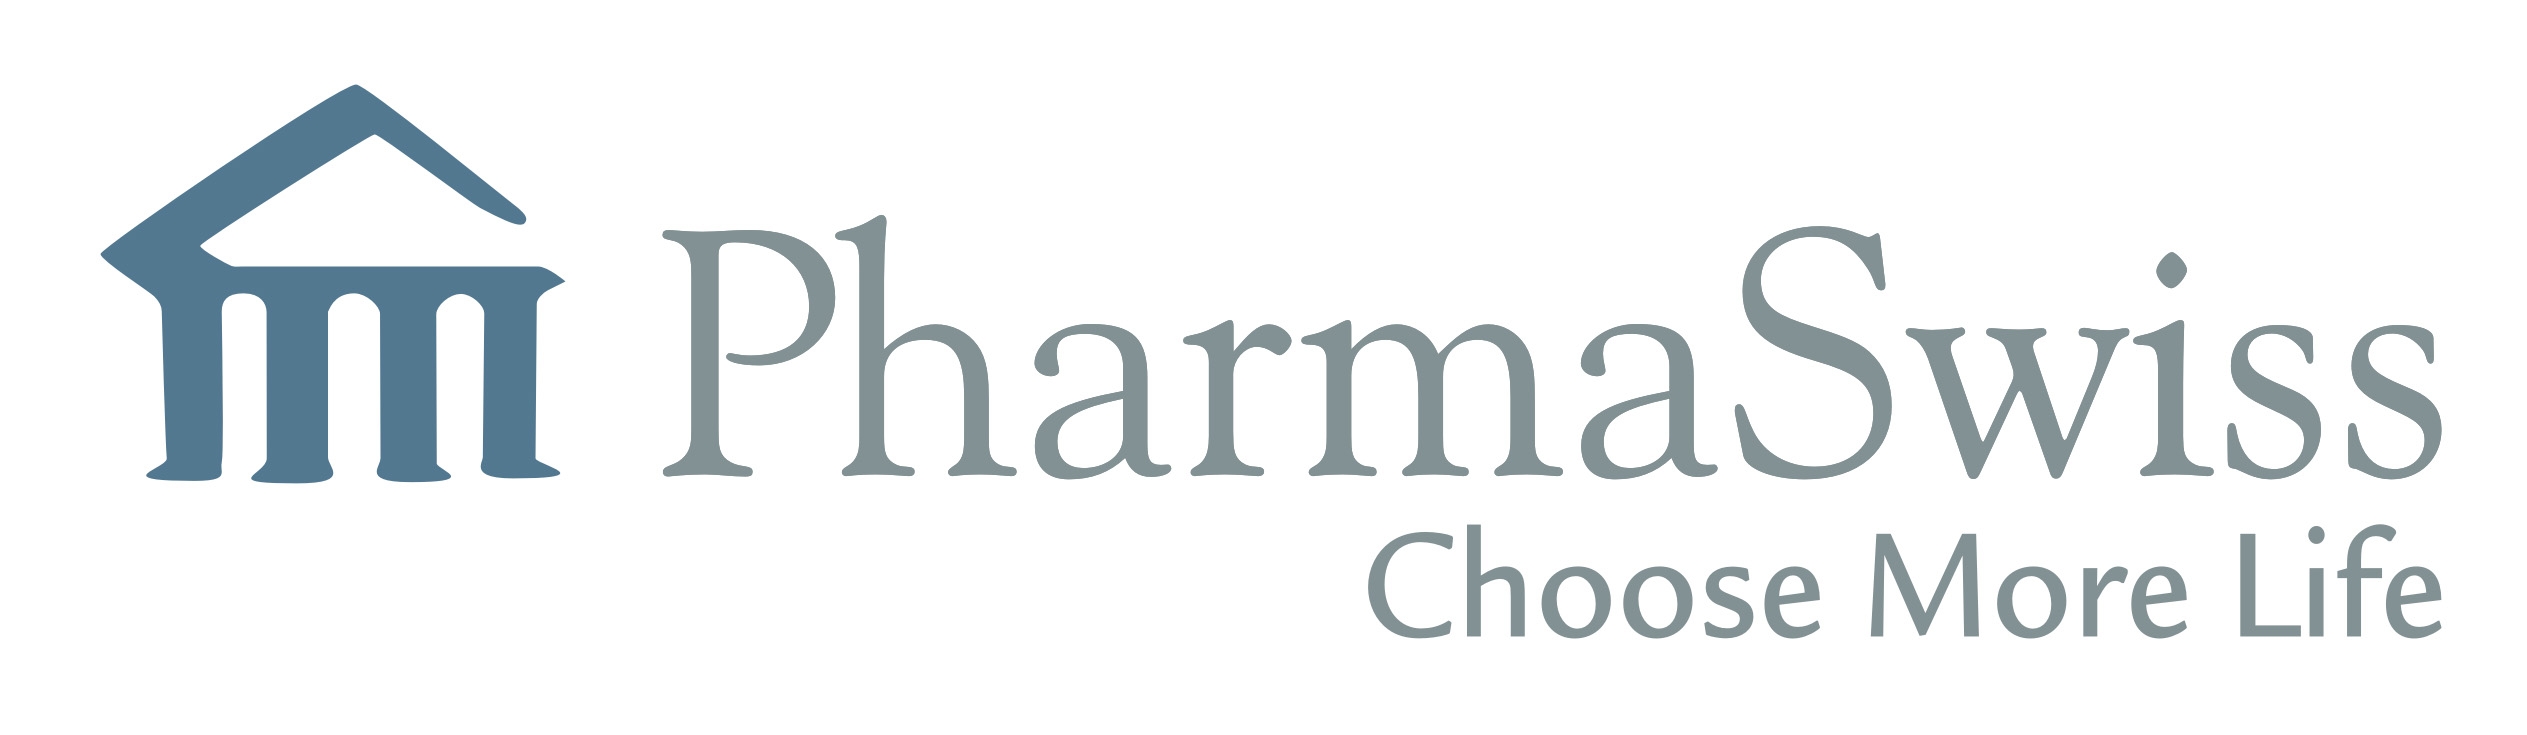 Pharma Swiss Logo photo - 1